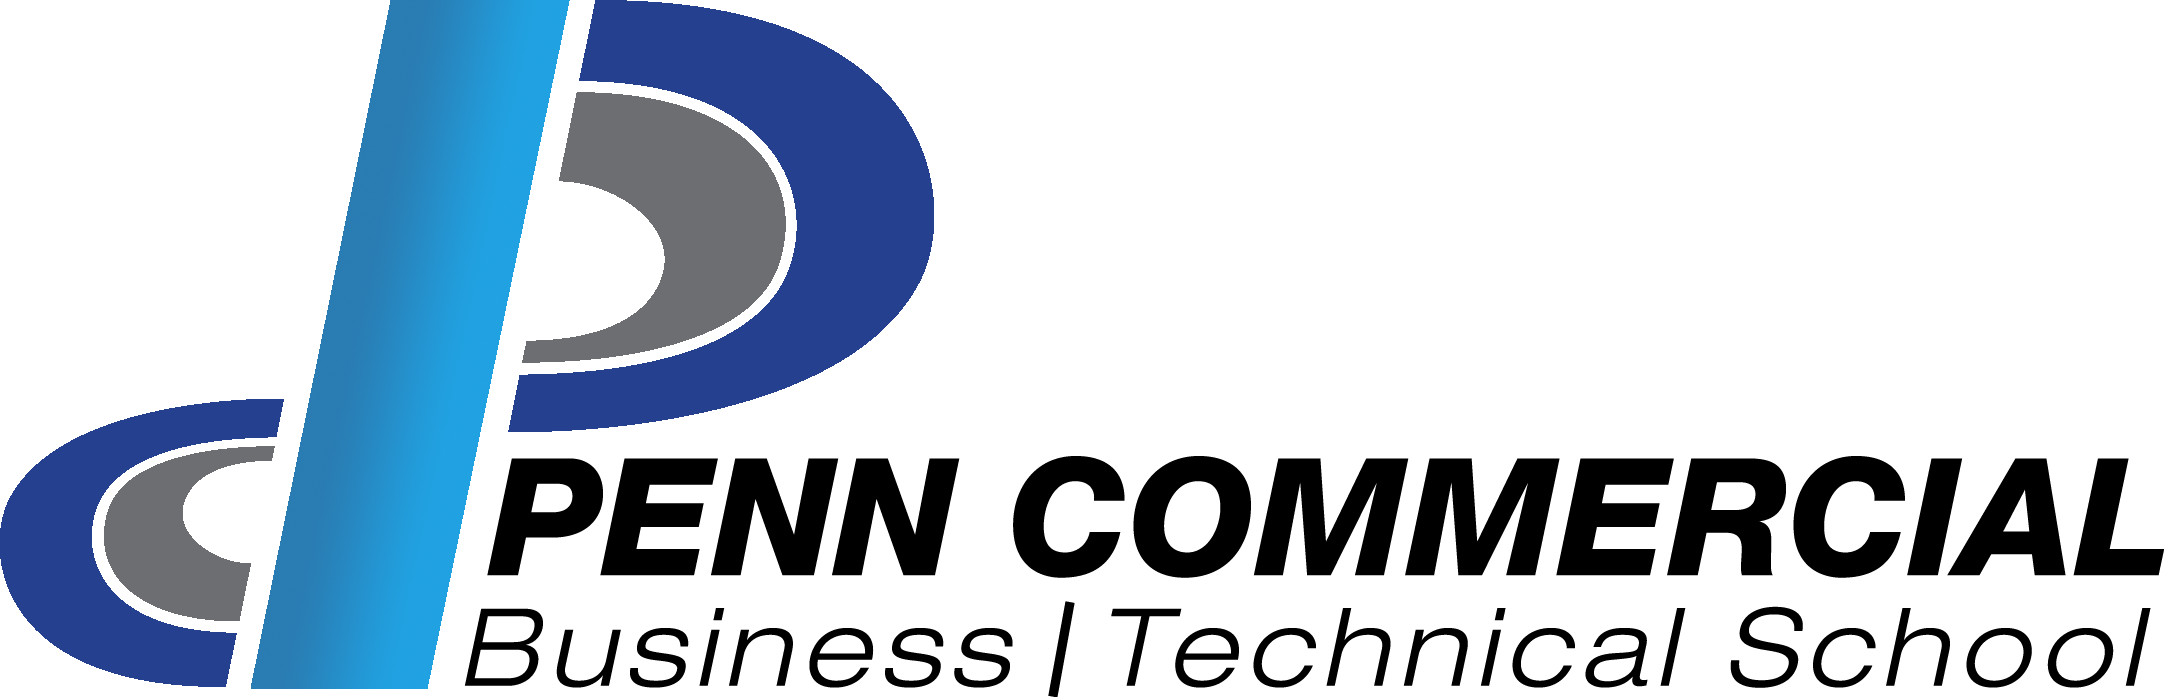 Penn Commercial logo in color